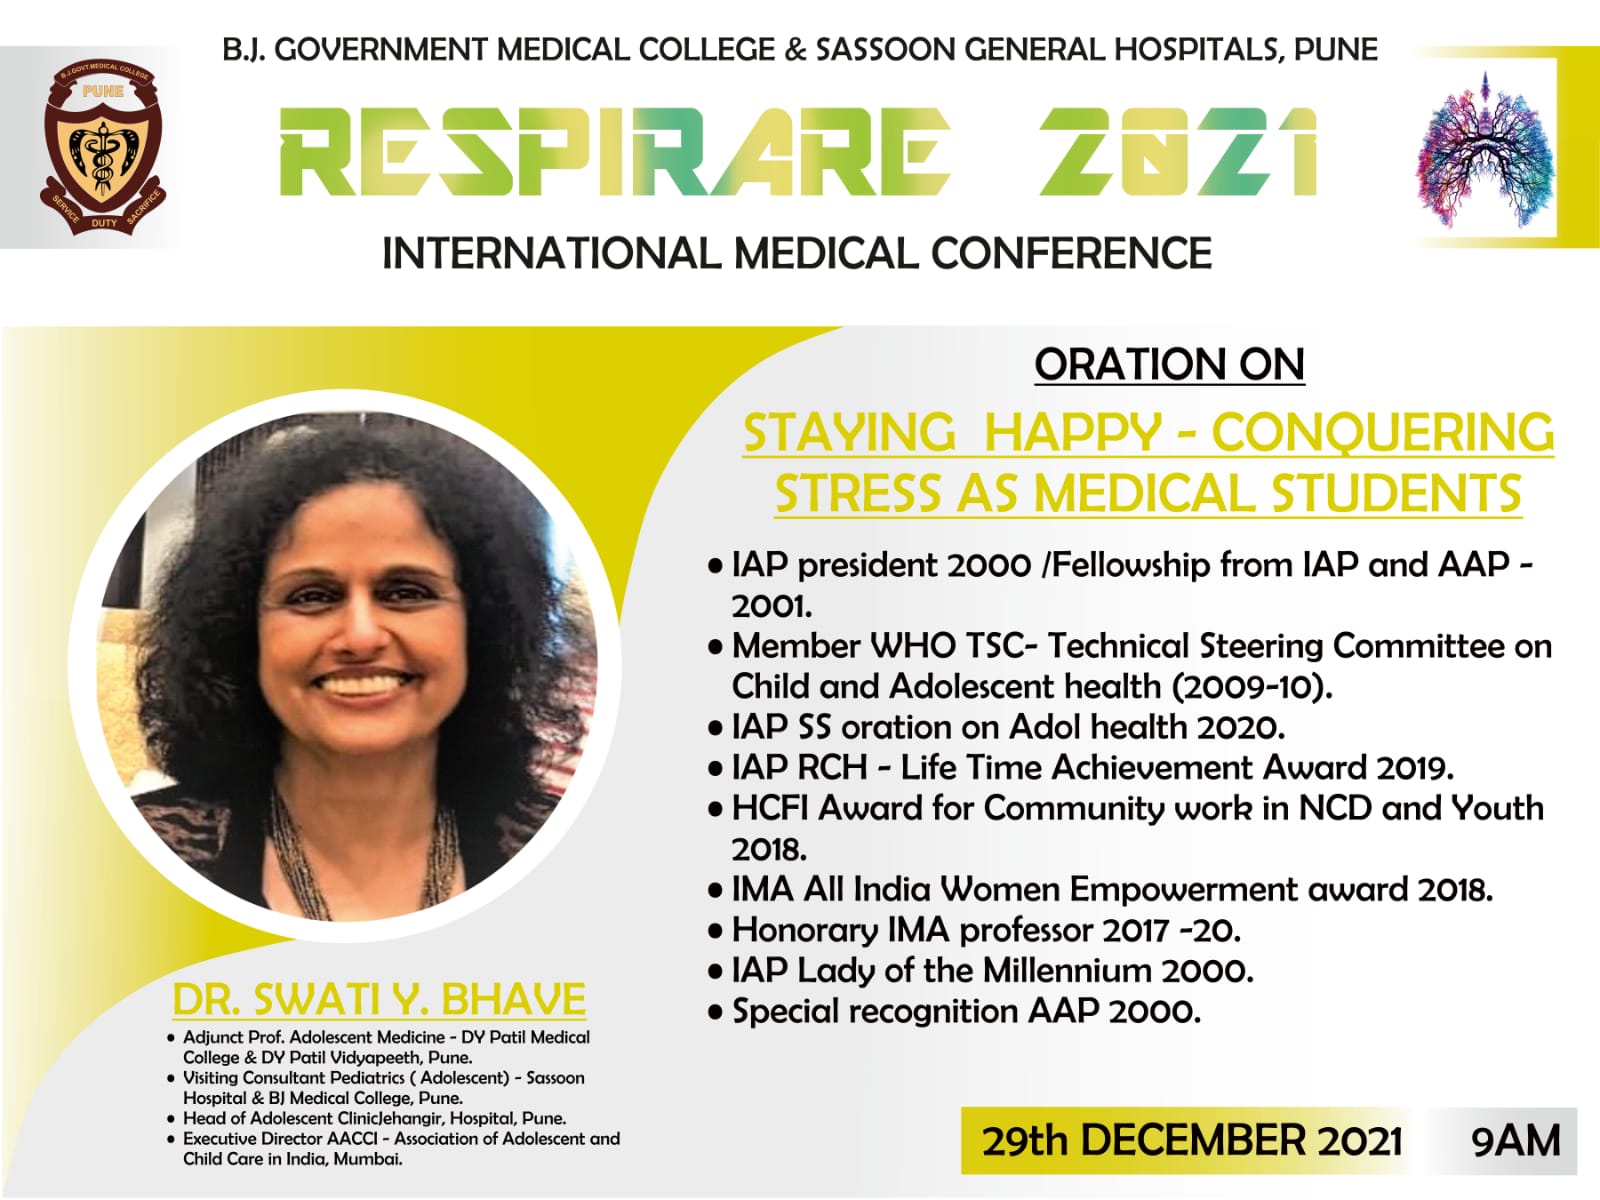 International Medical Conference Respirare 2021